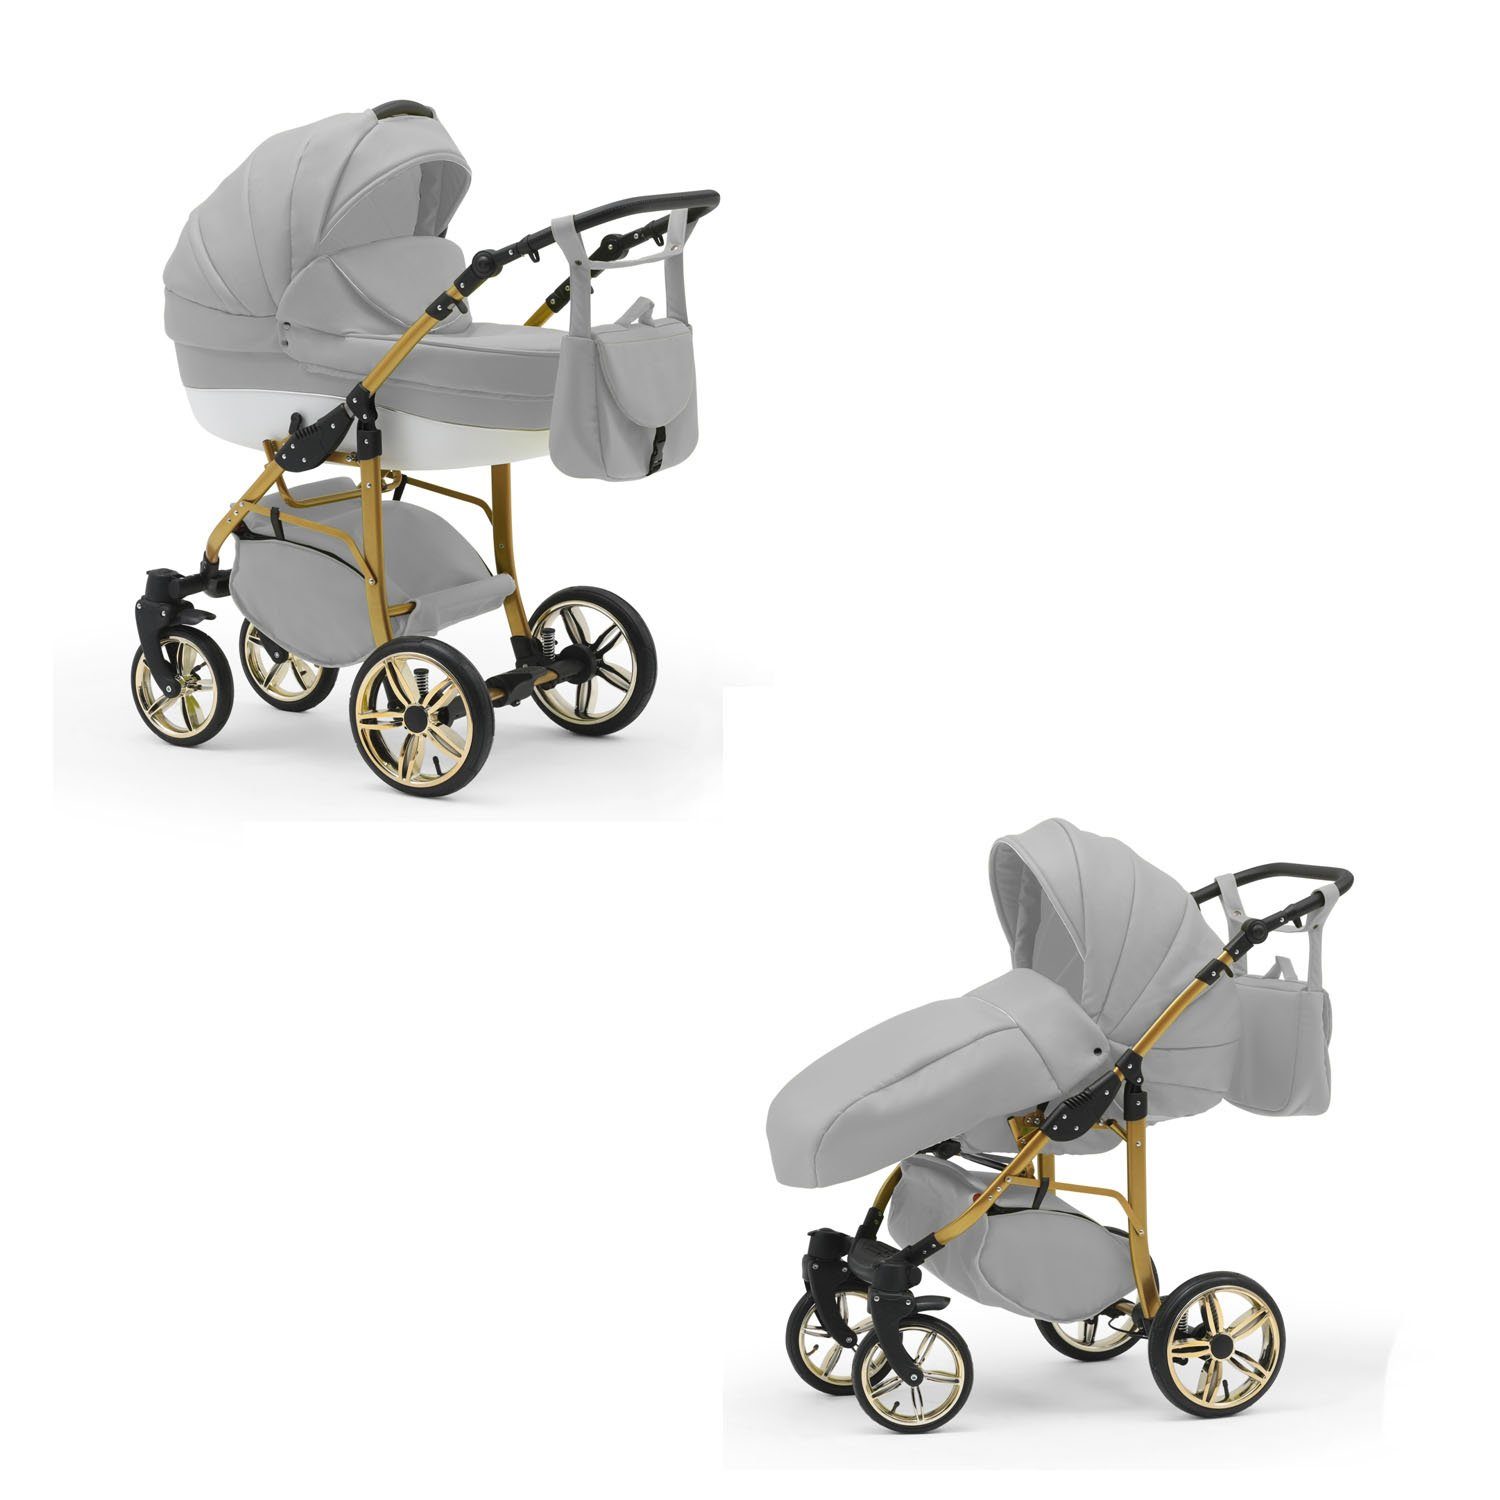 Hellgrau-Weiß 46 Farben in Cosmo Kinderwagen-Set Kombi-Kinderwagen in ECO 1 - 13 - Gold 2 babies-on-wheels Teile